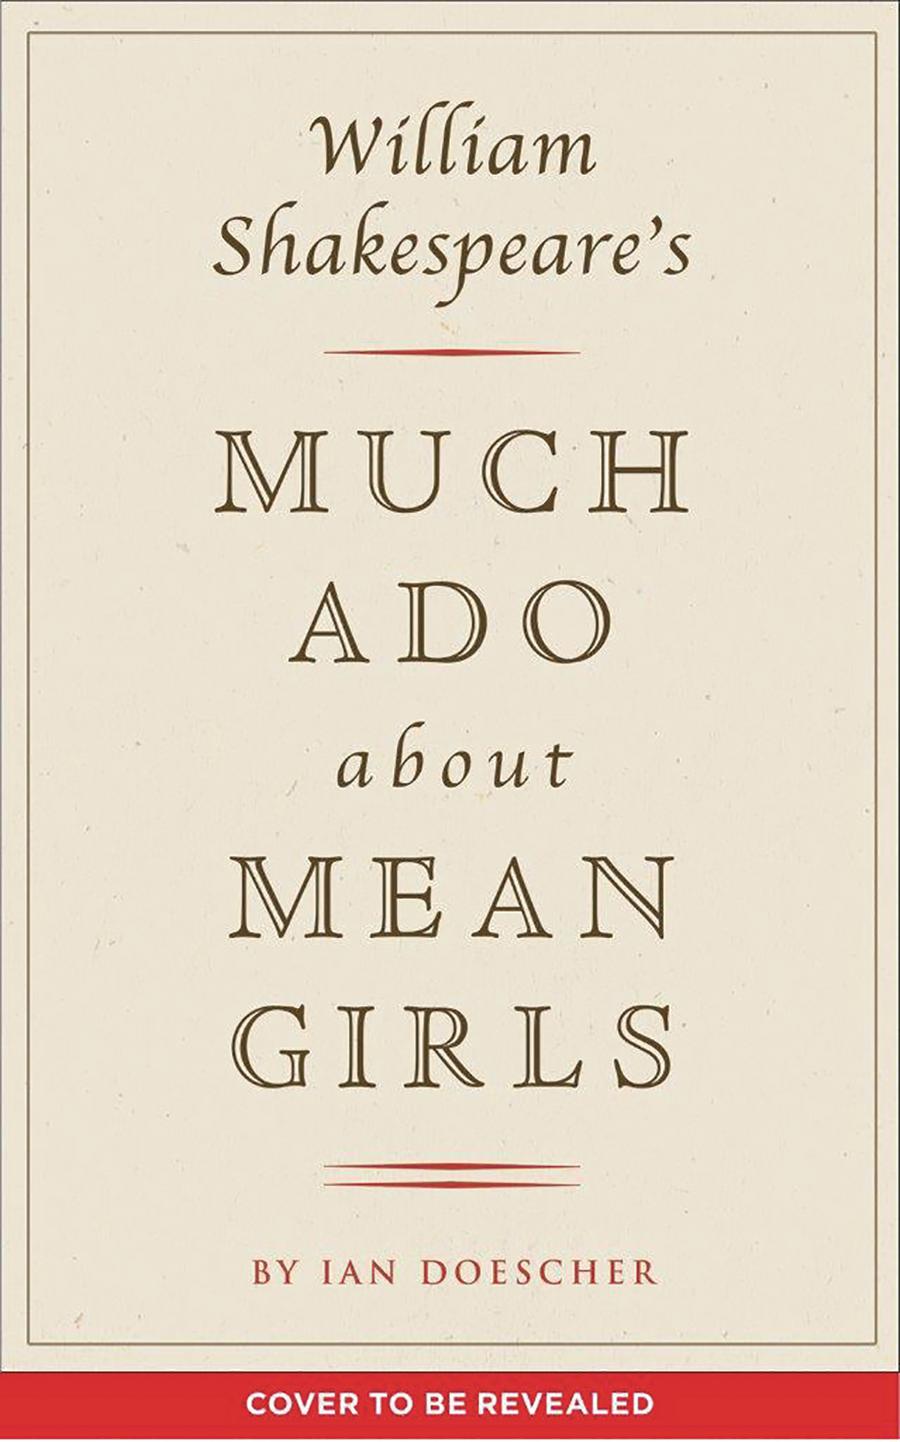 William Shakespeares Much Ado About Mean Girls SC